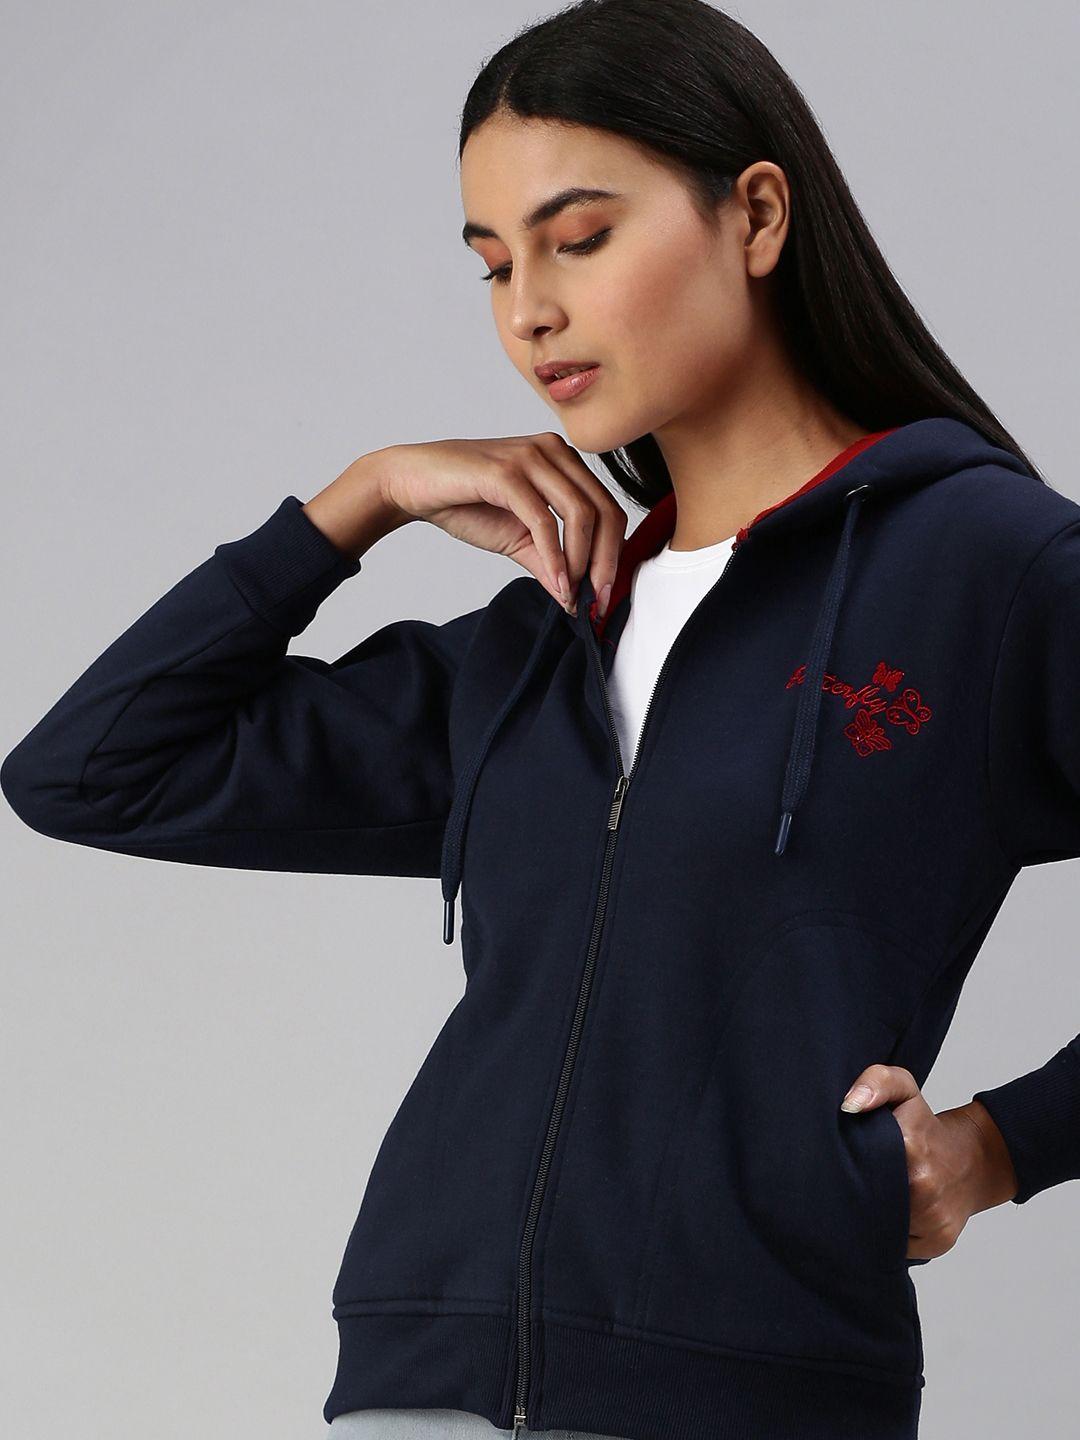 adbucks women navy blue & red embroidered hooded pure cotton sweatshirt